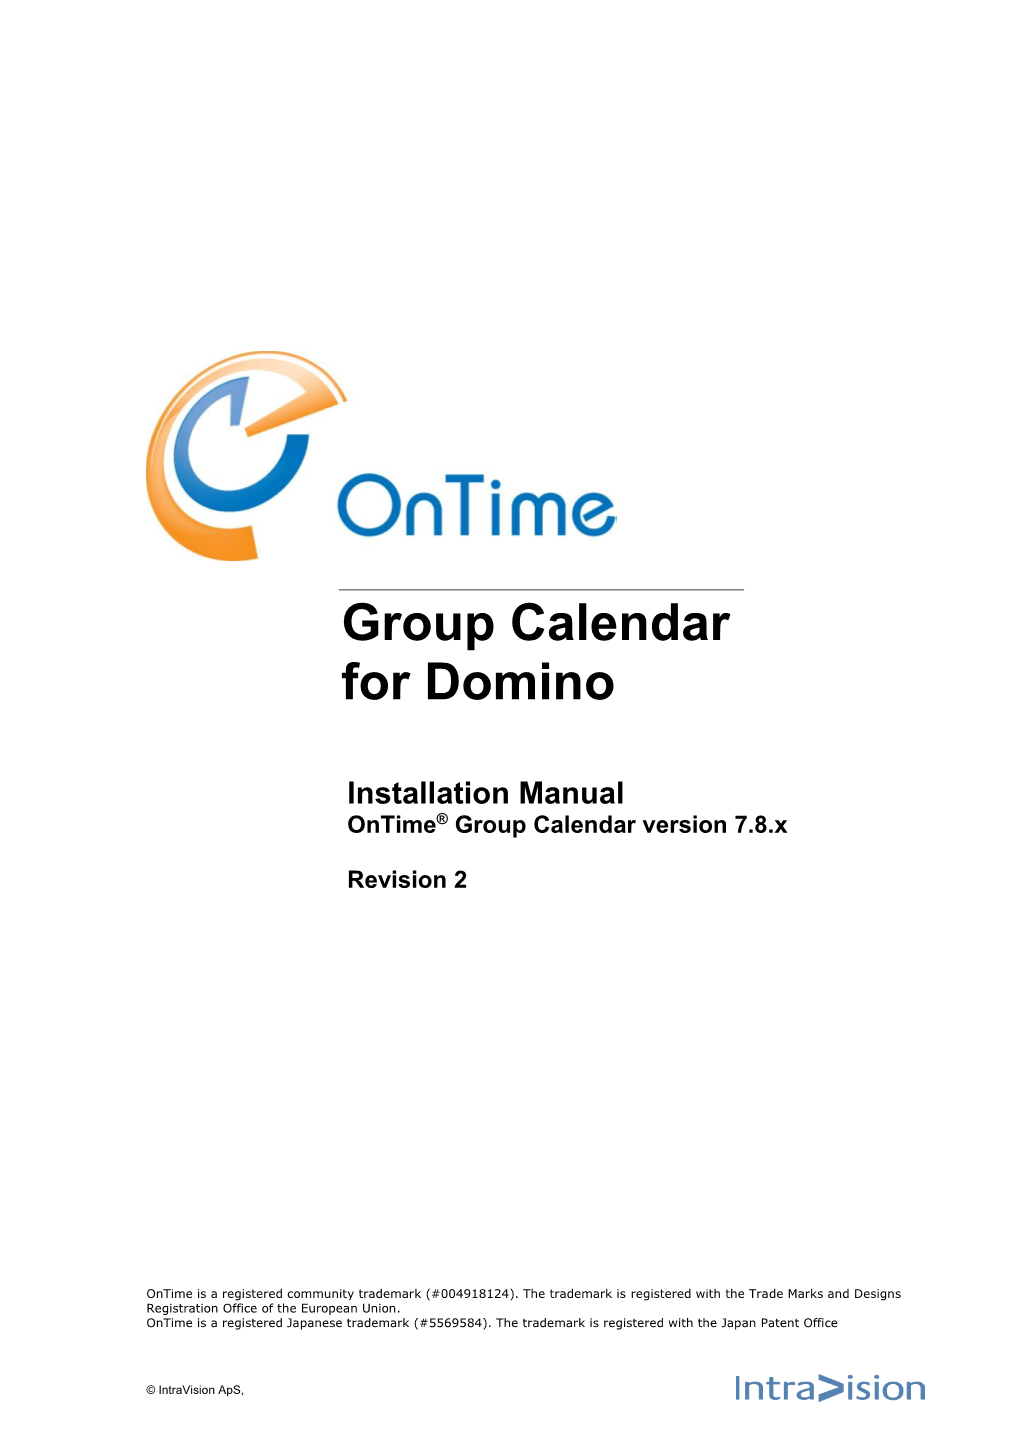 Group Calendar for Domino